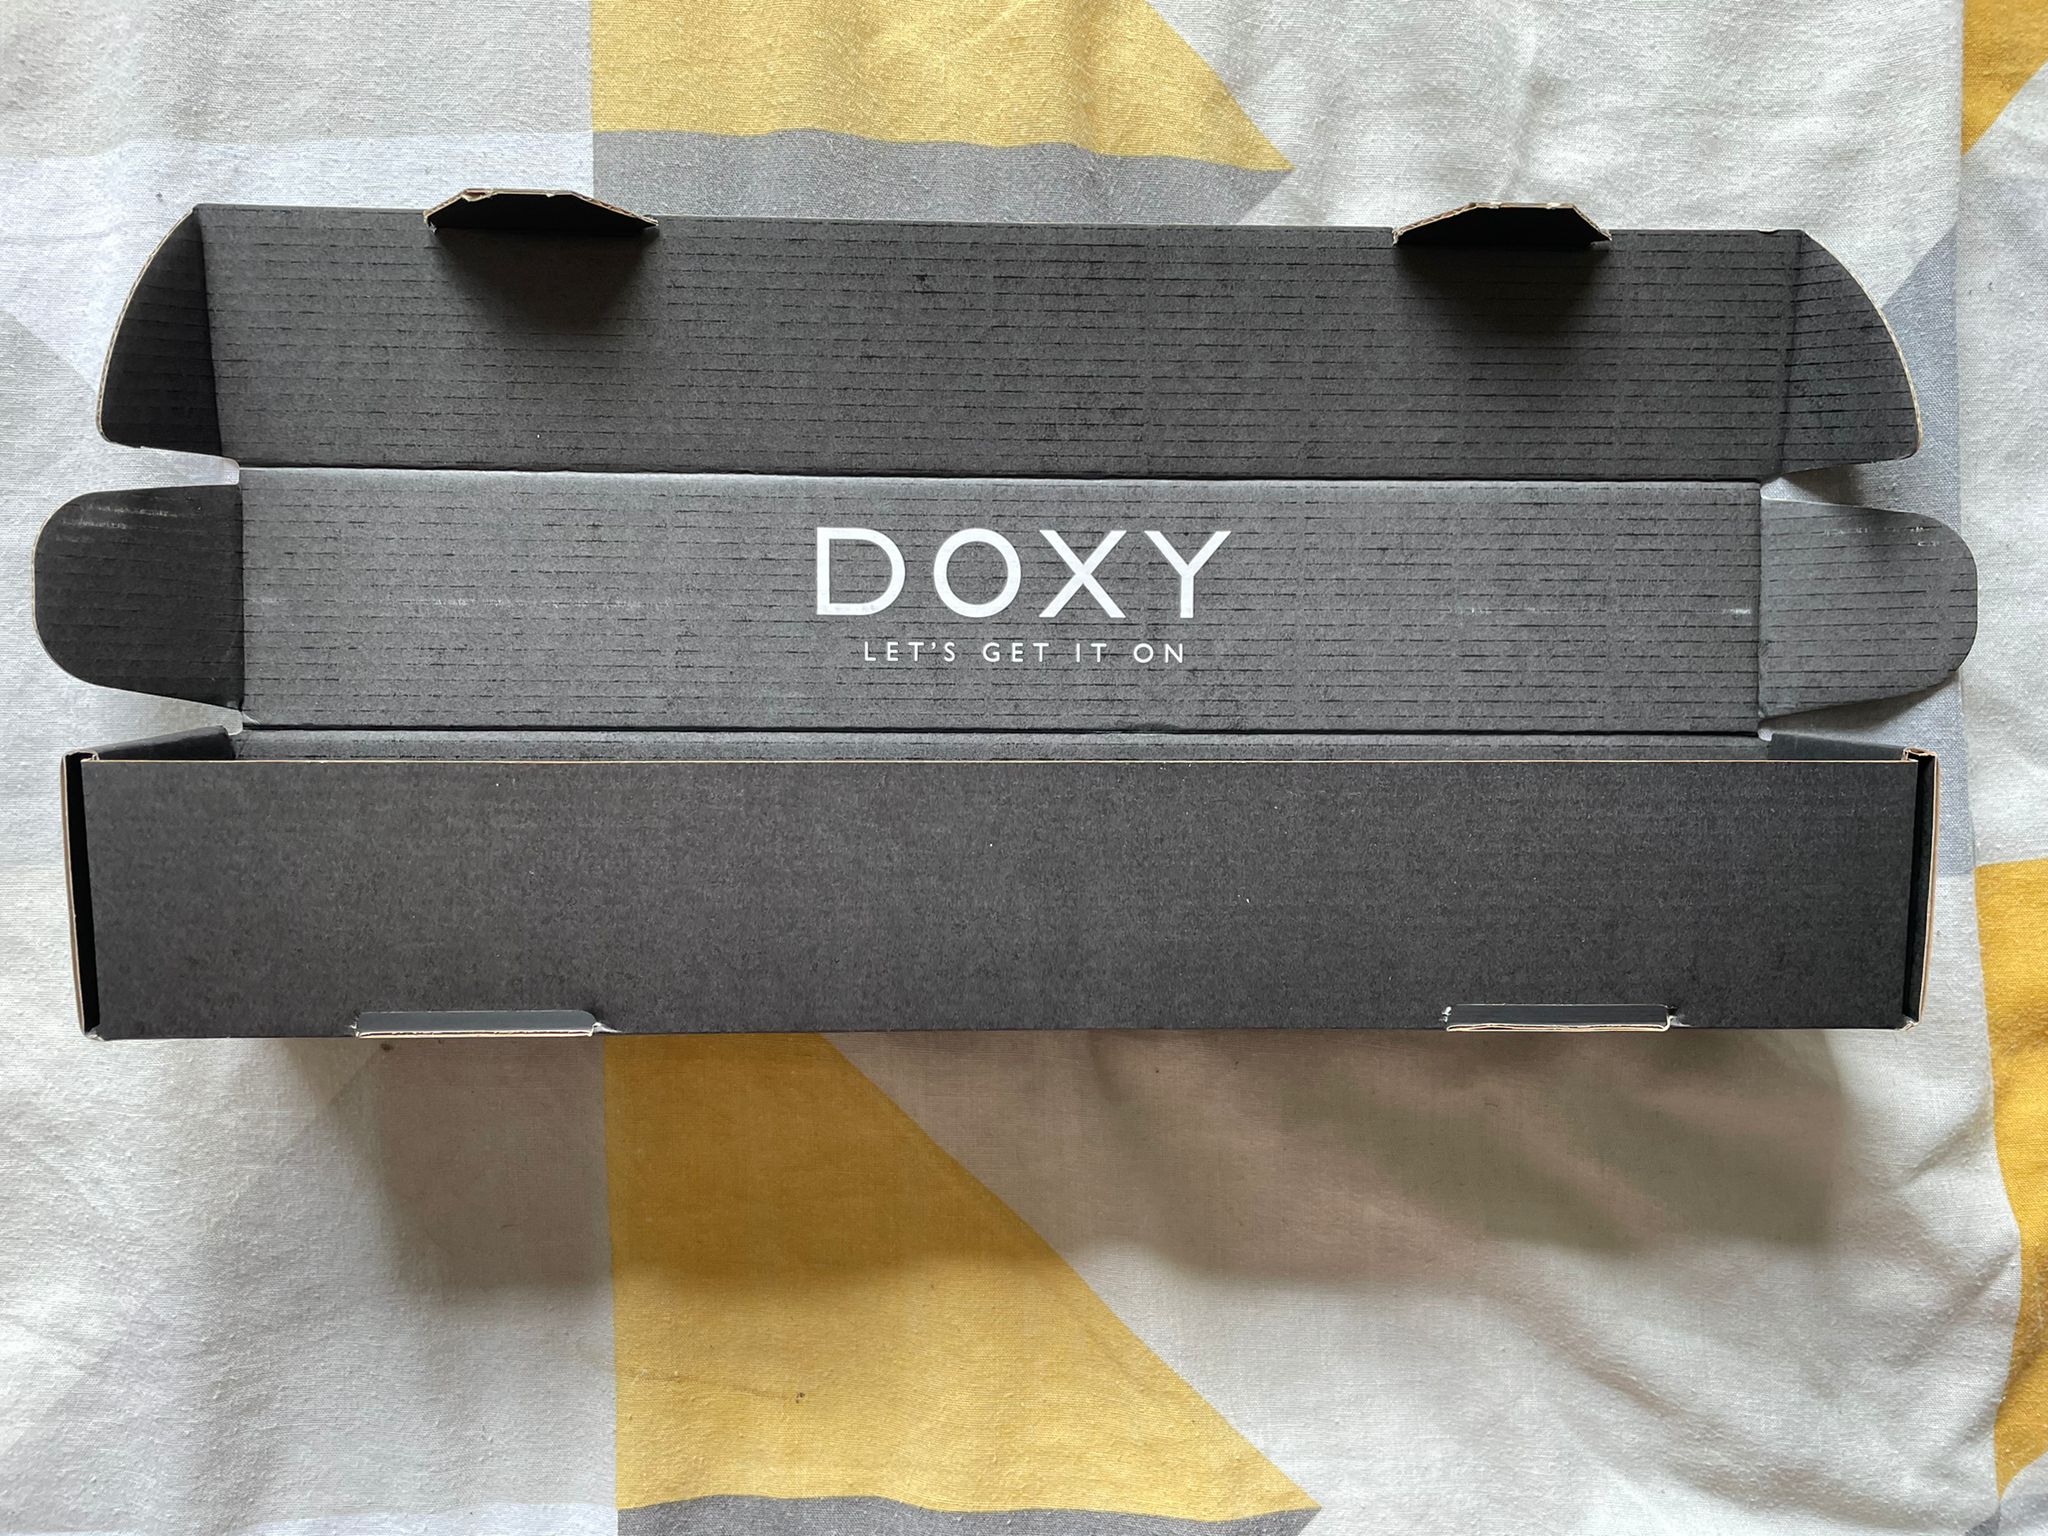 Doxy Die Cast 3R The Doxy Die Cast 3R’s Packaging: Hit or Miss?